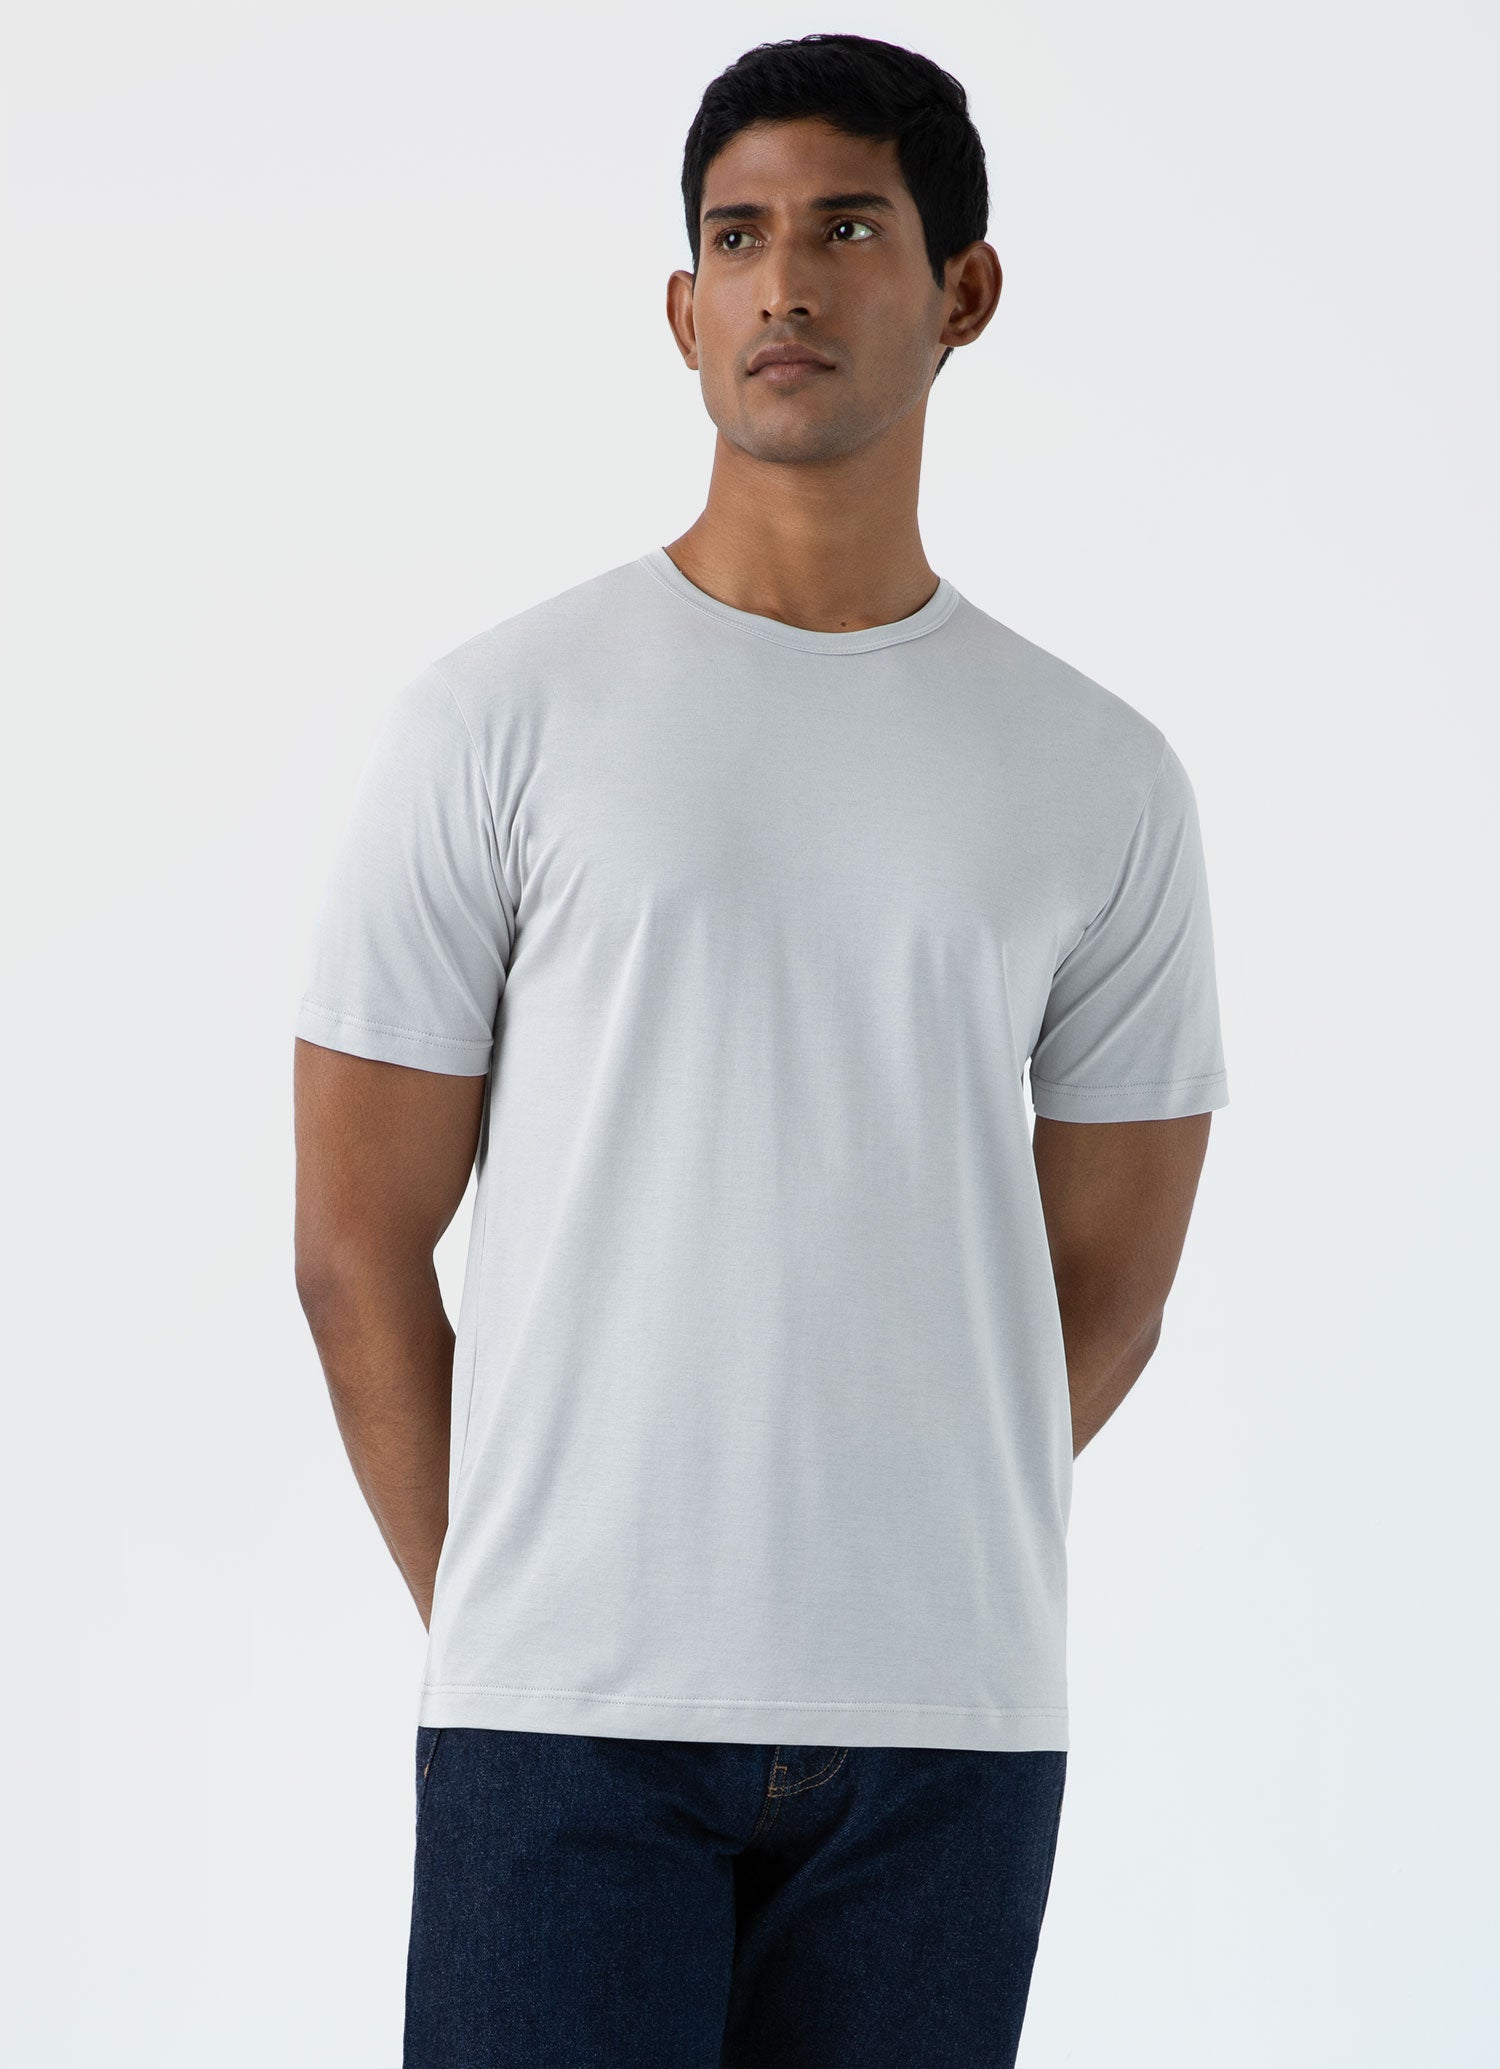 Men's Riviera Midweight T-shirt in White